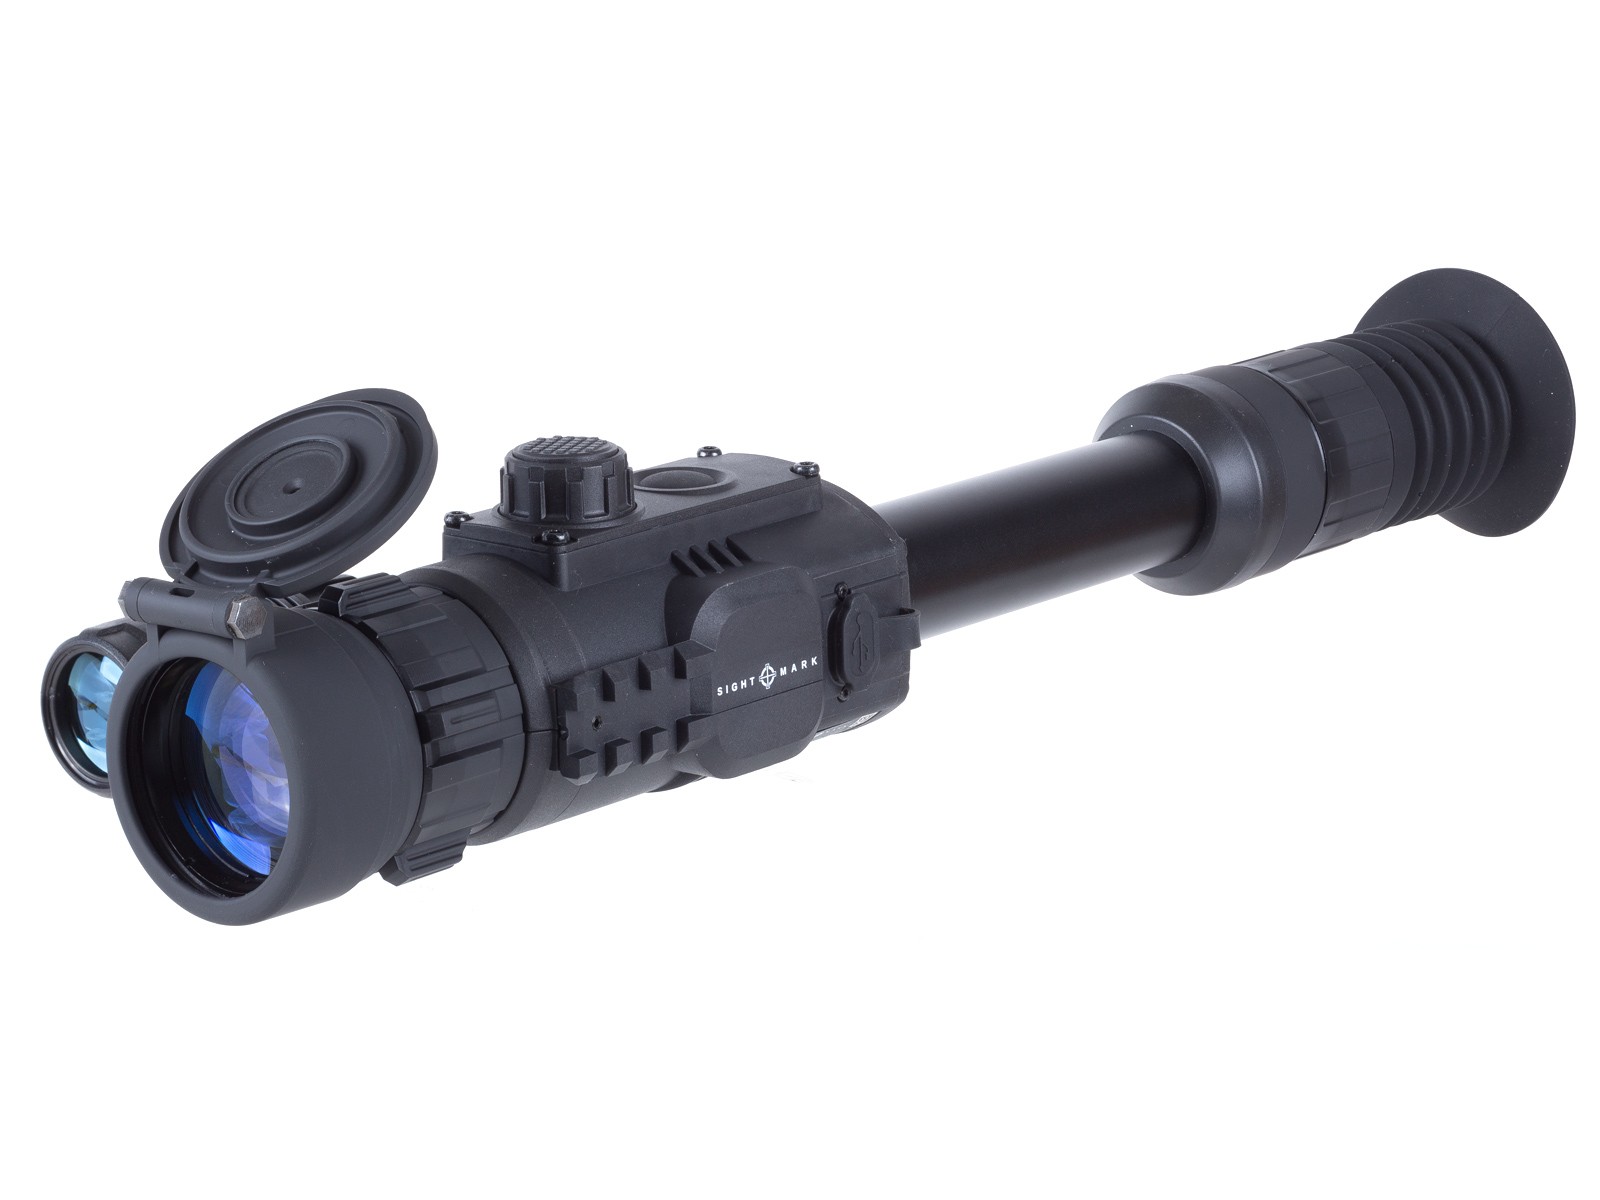 Photon RT 4.5x42s Digital Night Vision Riflescope